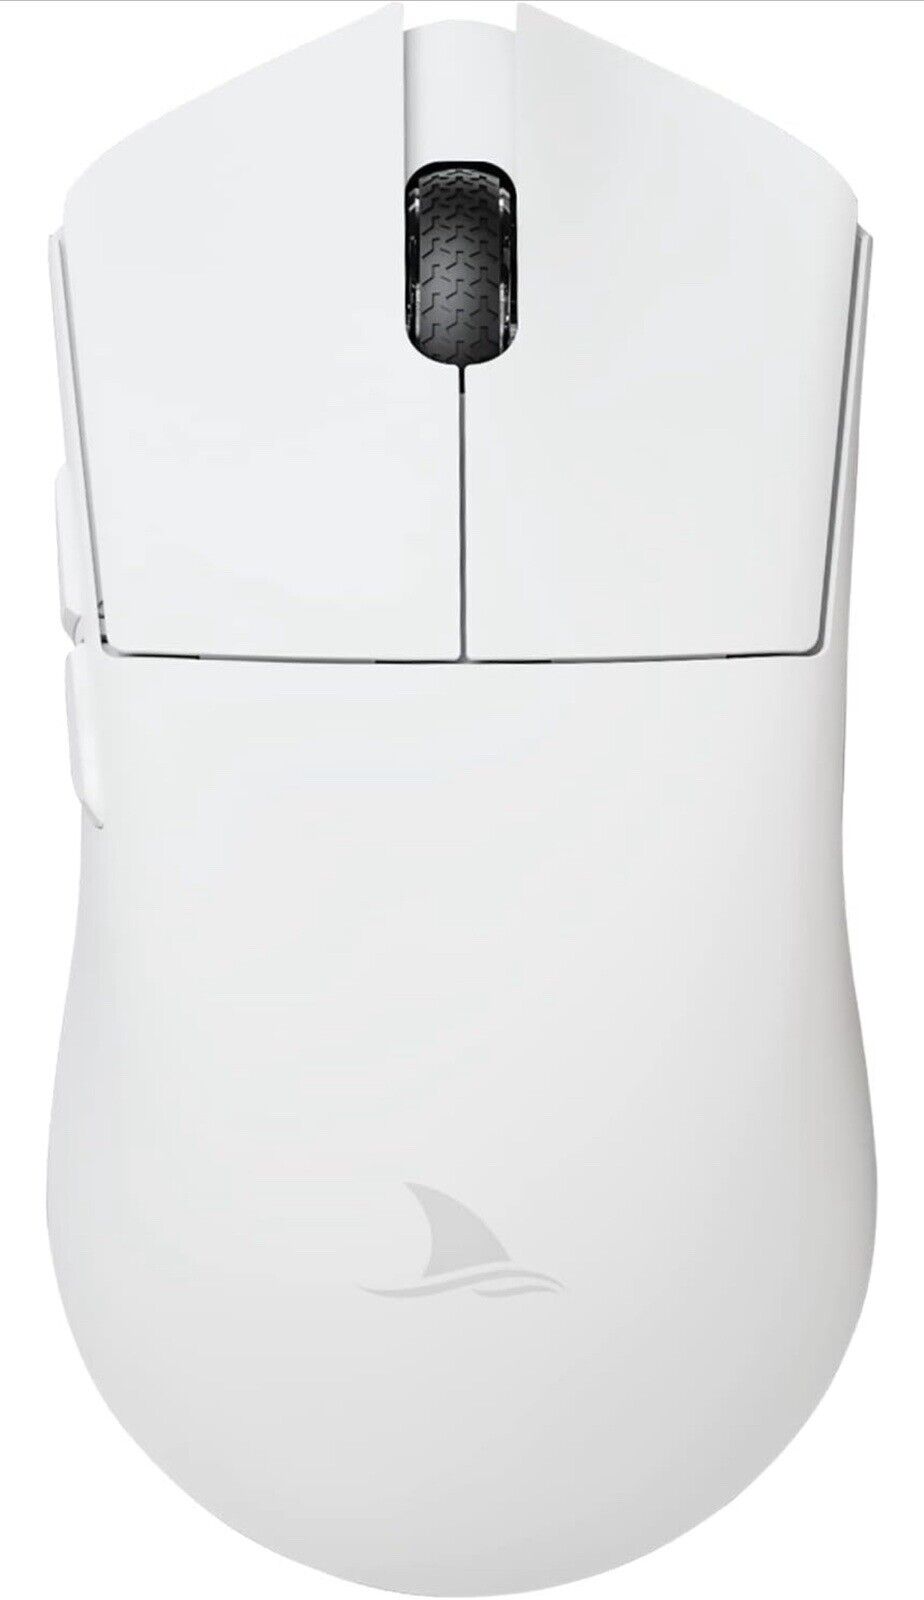 Kiran darmoshark M3 Wireless Gaming Mouse 